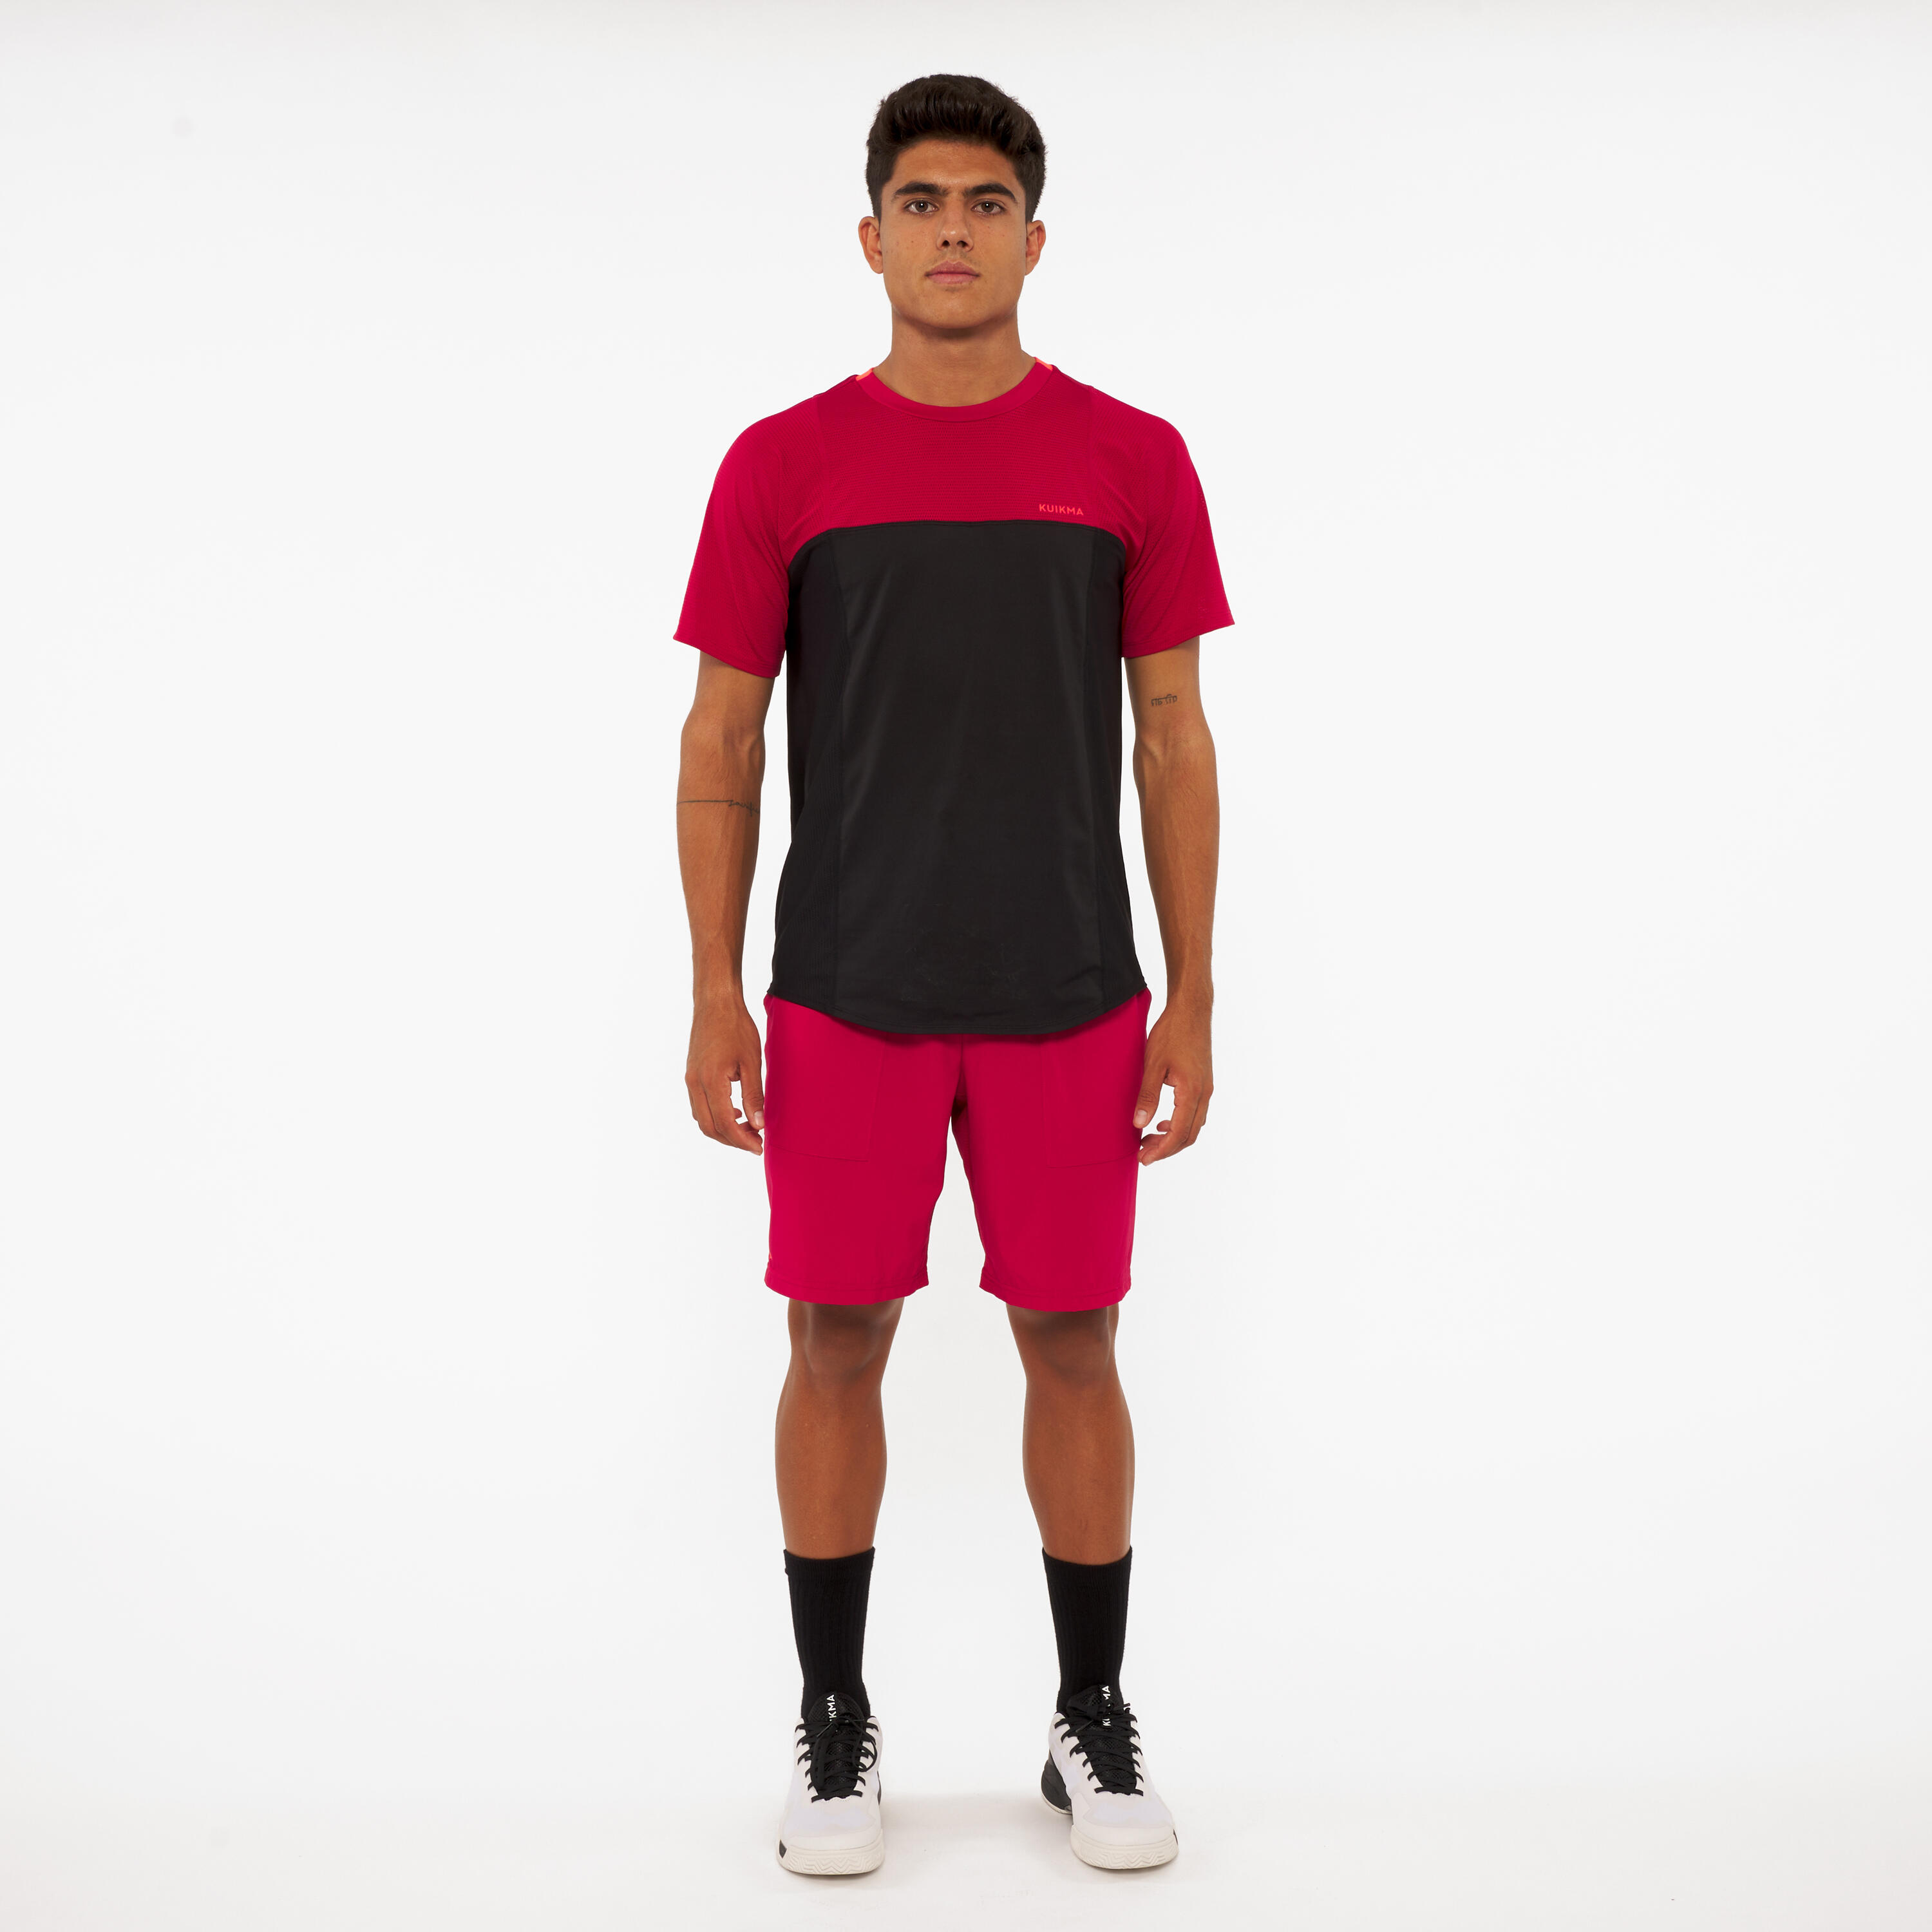 Men's Padel Short-Sleeved Breathable T-Shirt - Black/Red 2/8